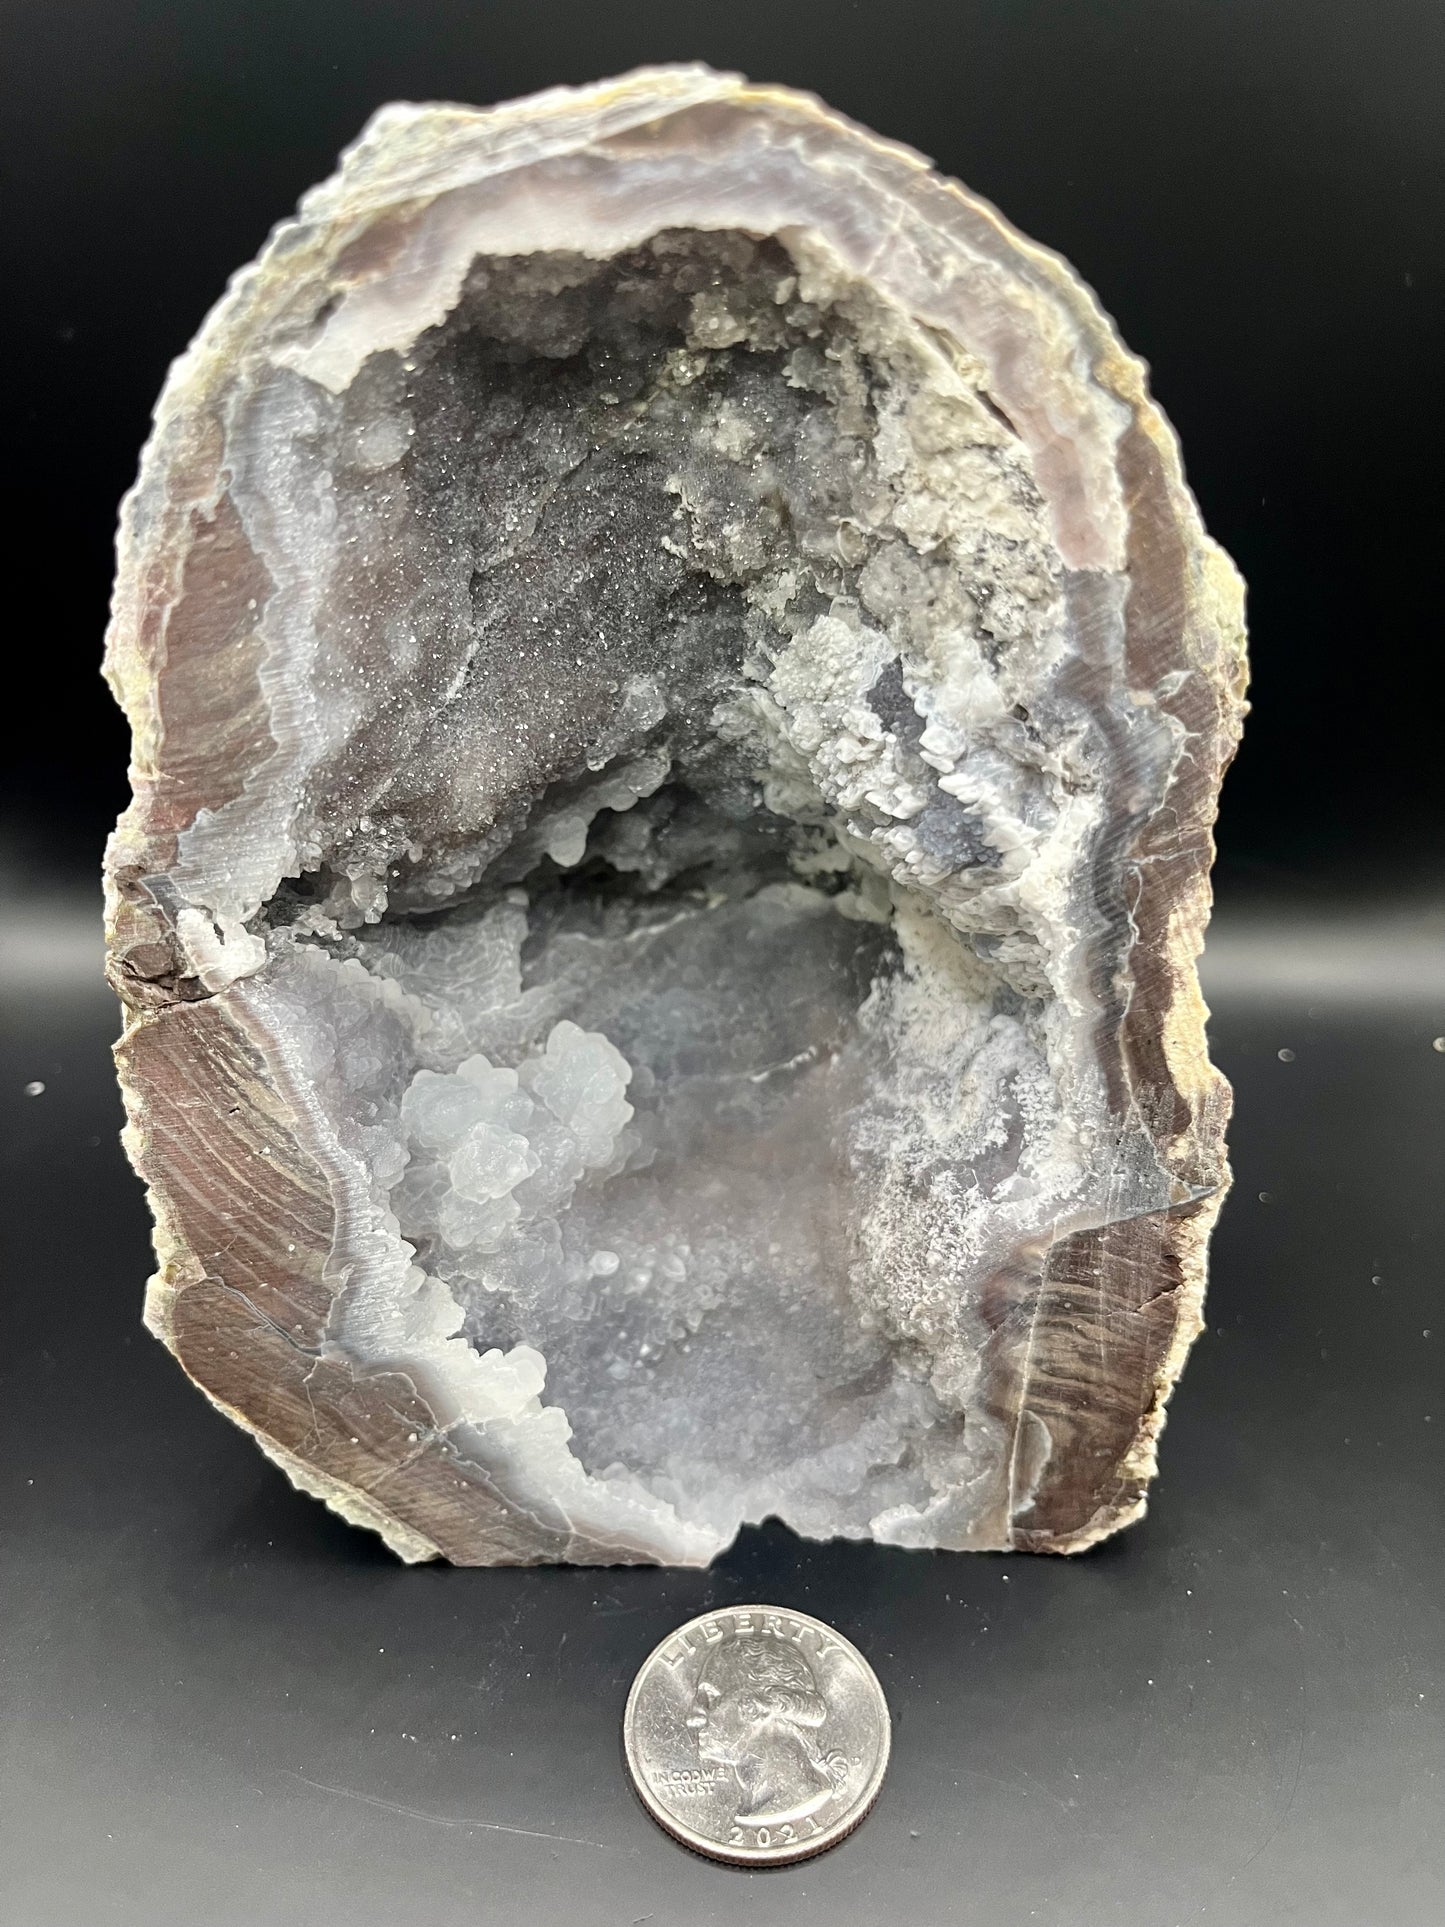 Quartz Agate “Galaxy” Geode Dugway